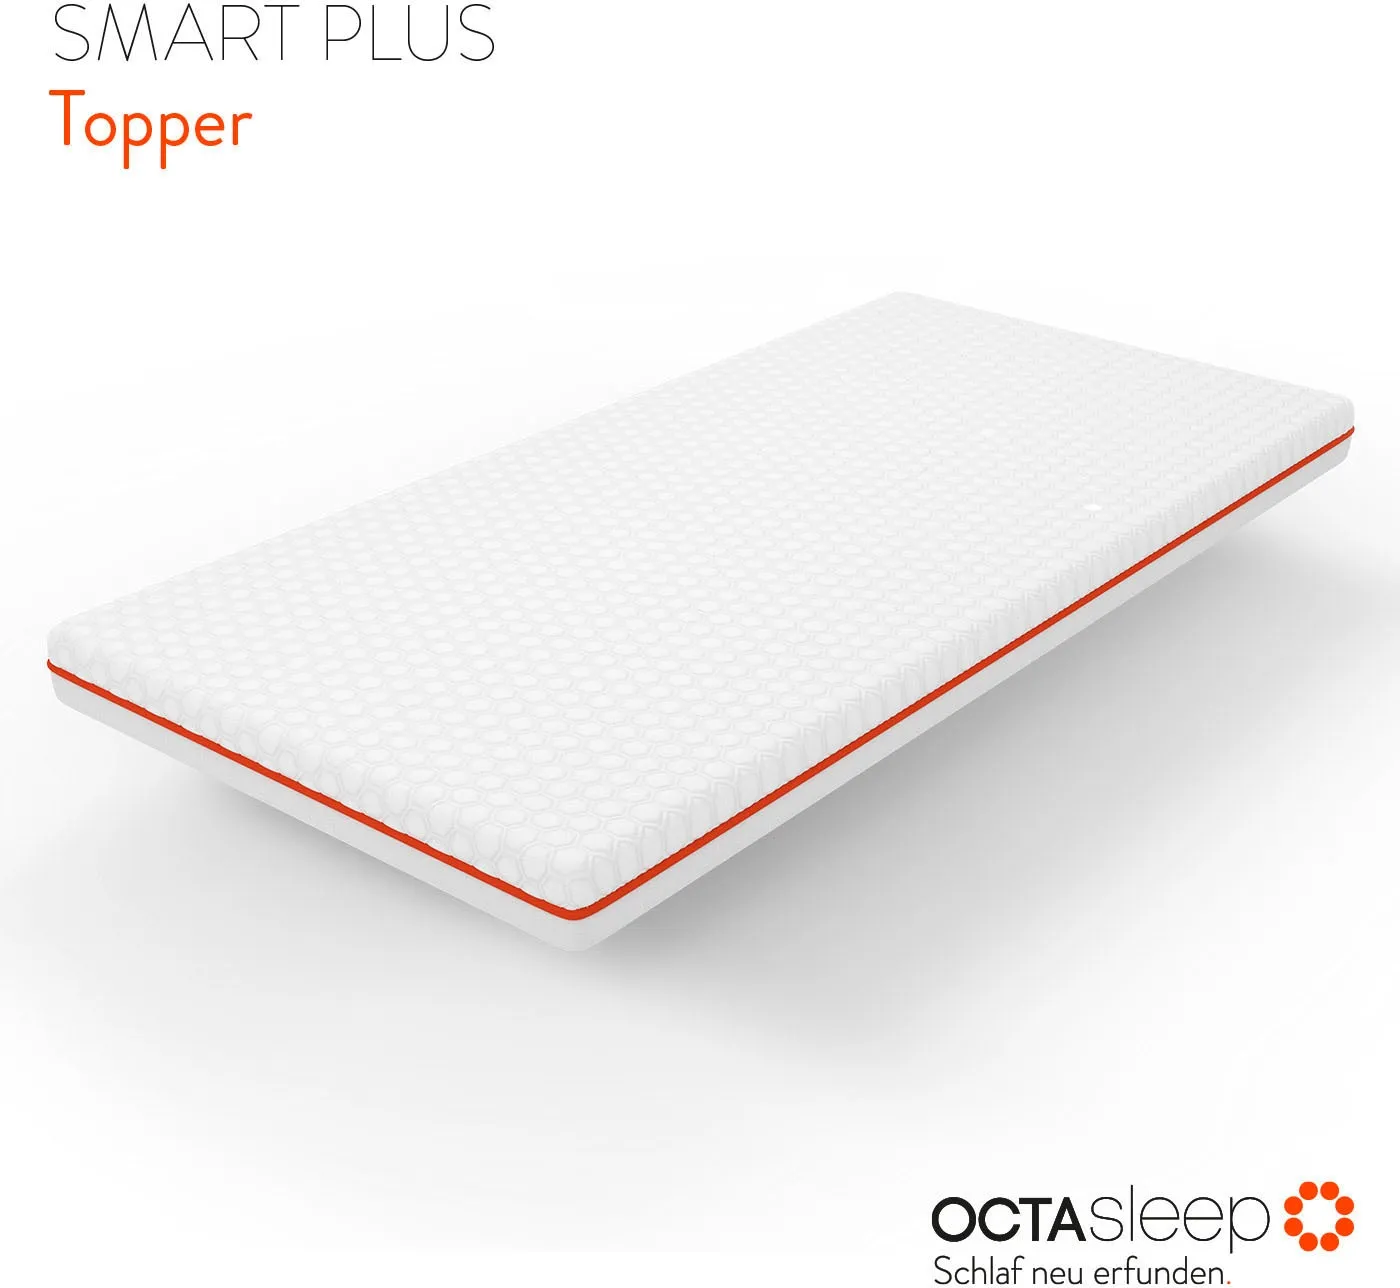 OCTAsleep Topper »Octasleep Smart Plus Topper«, (1 St.), OCTAspring® Aerospace Technologie OCTAsleep weiß fle x ibel